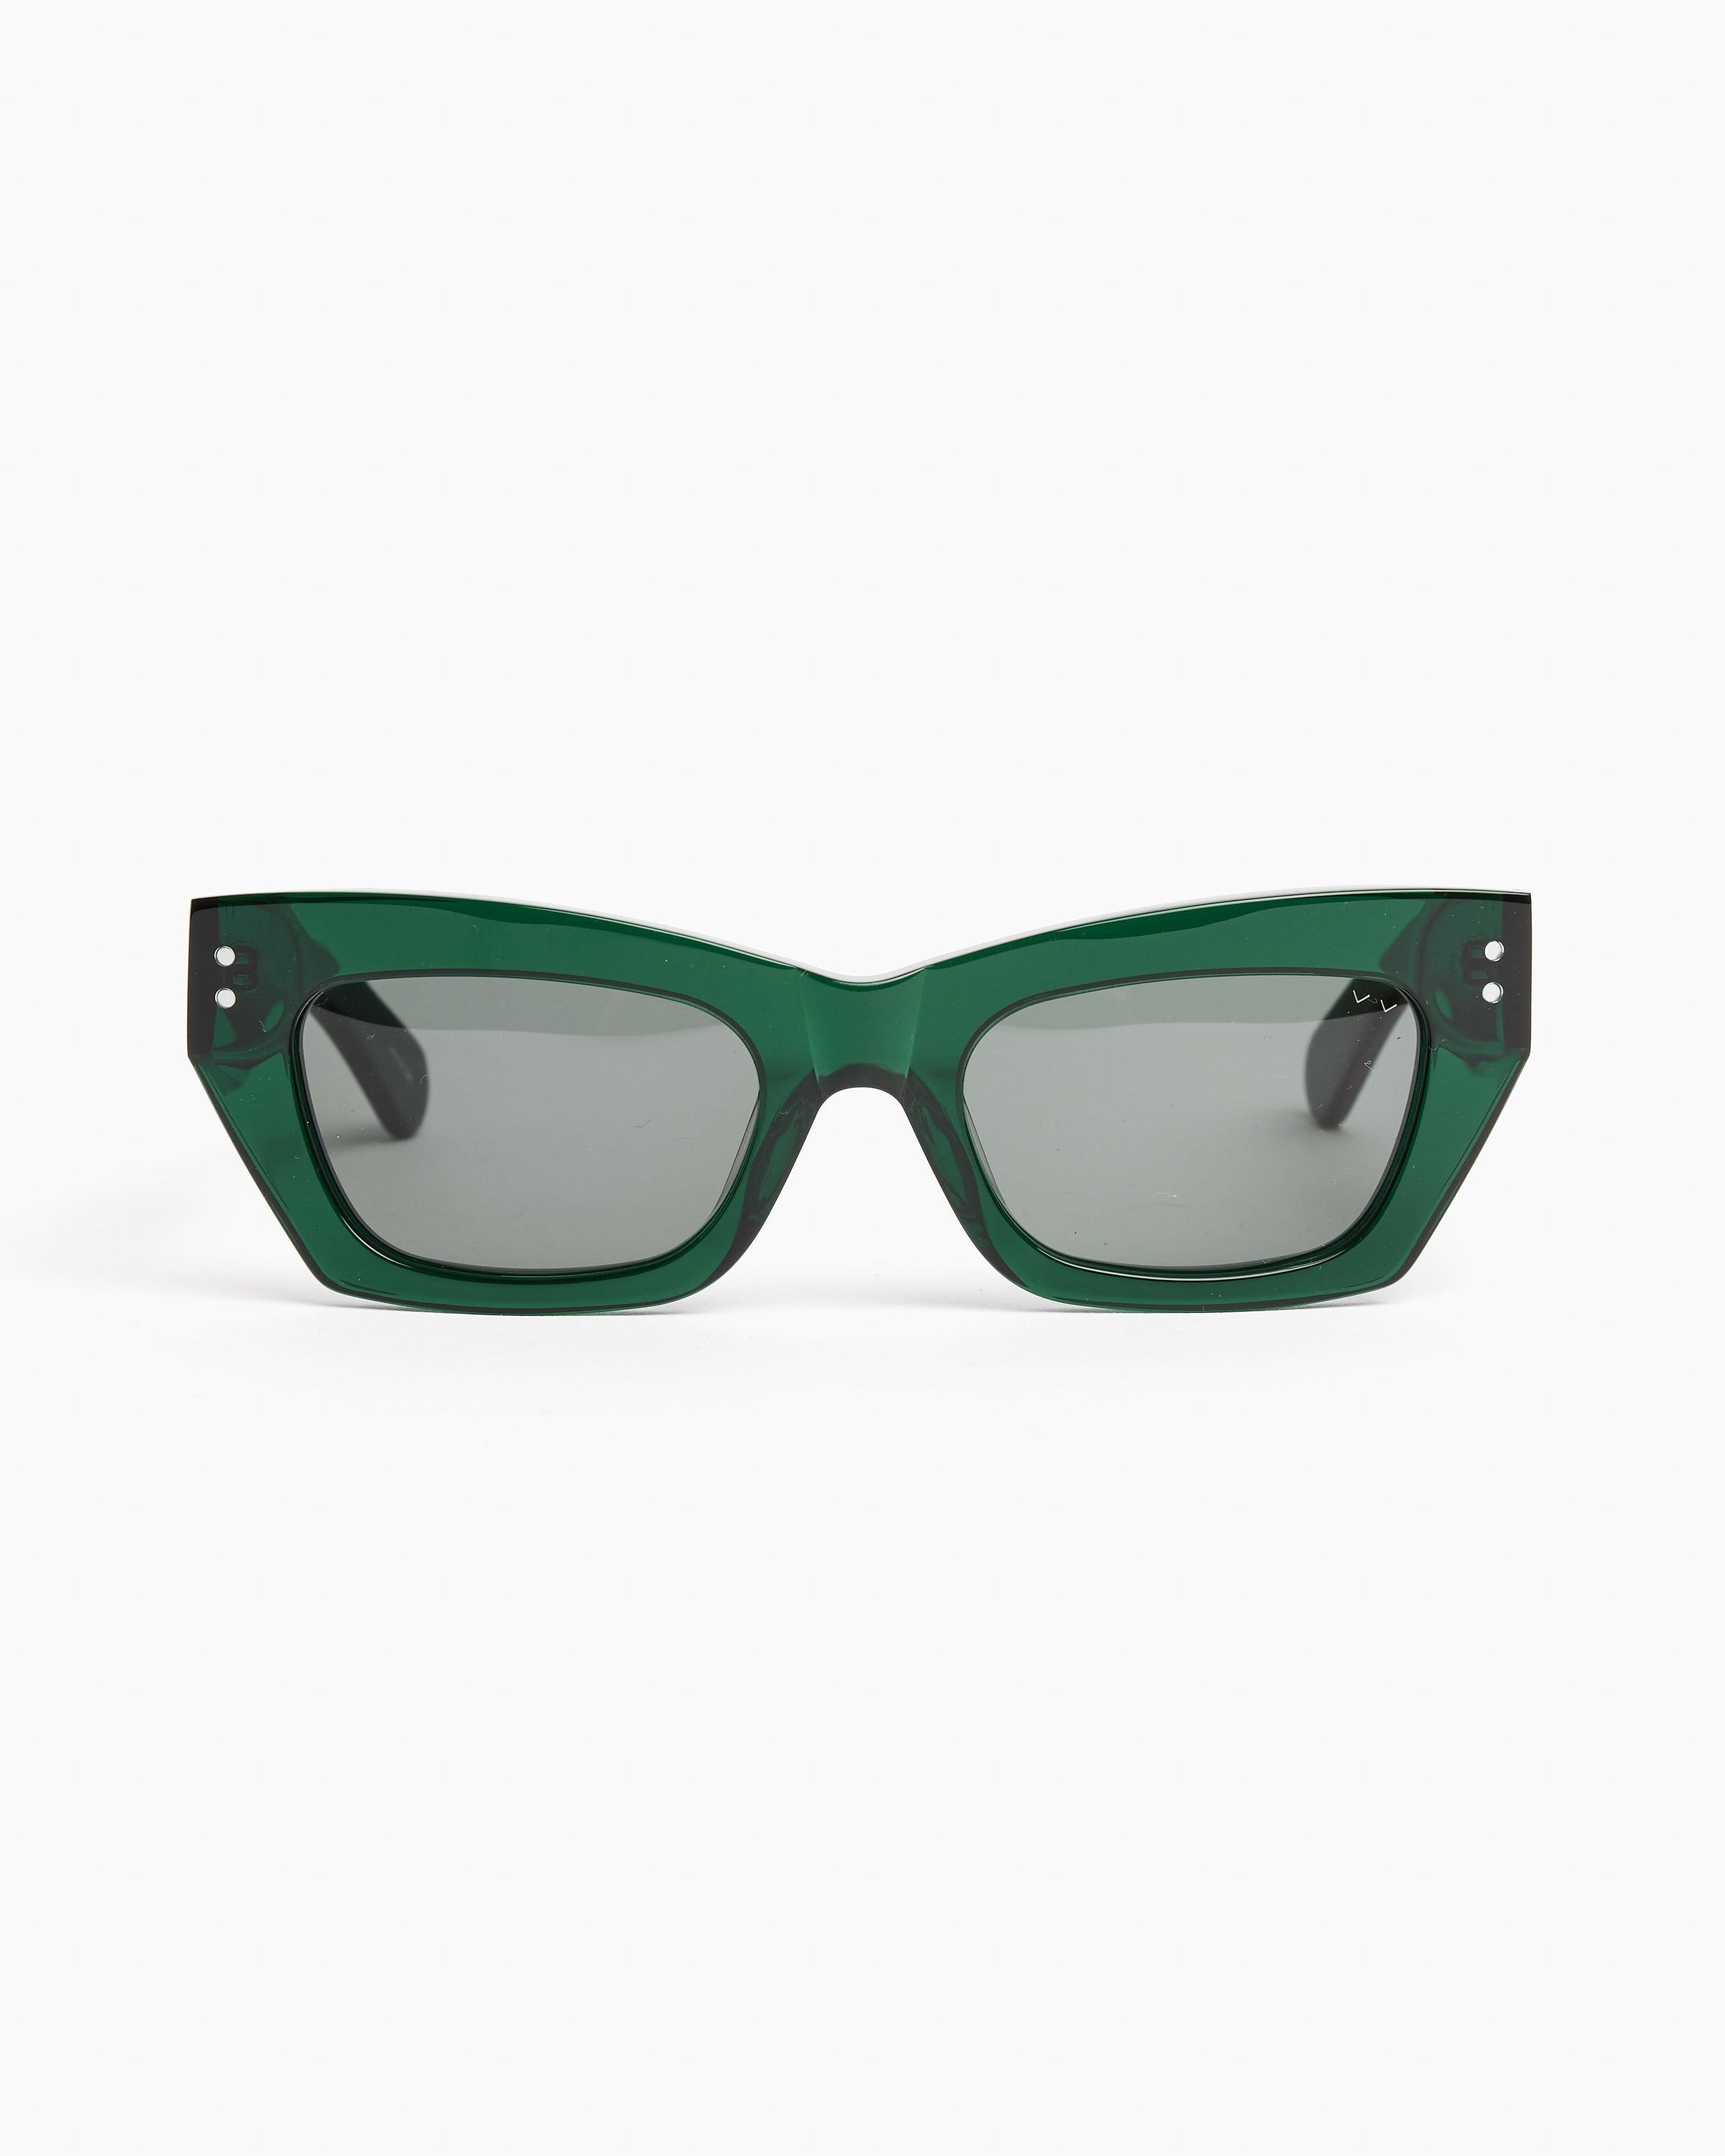 Petite Amour Sunglasses in Emerald